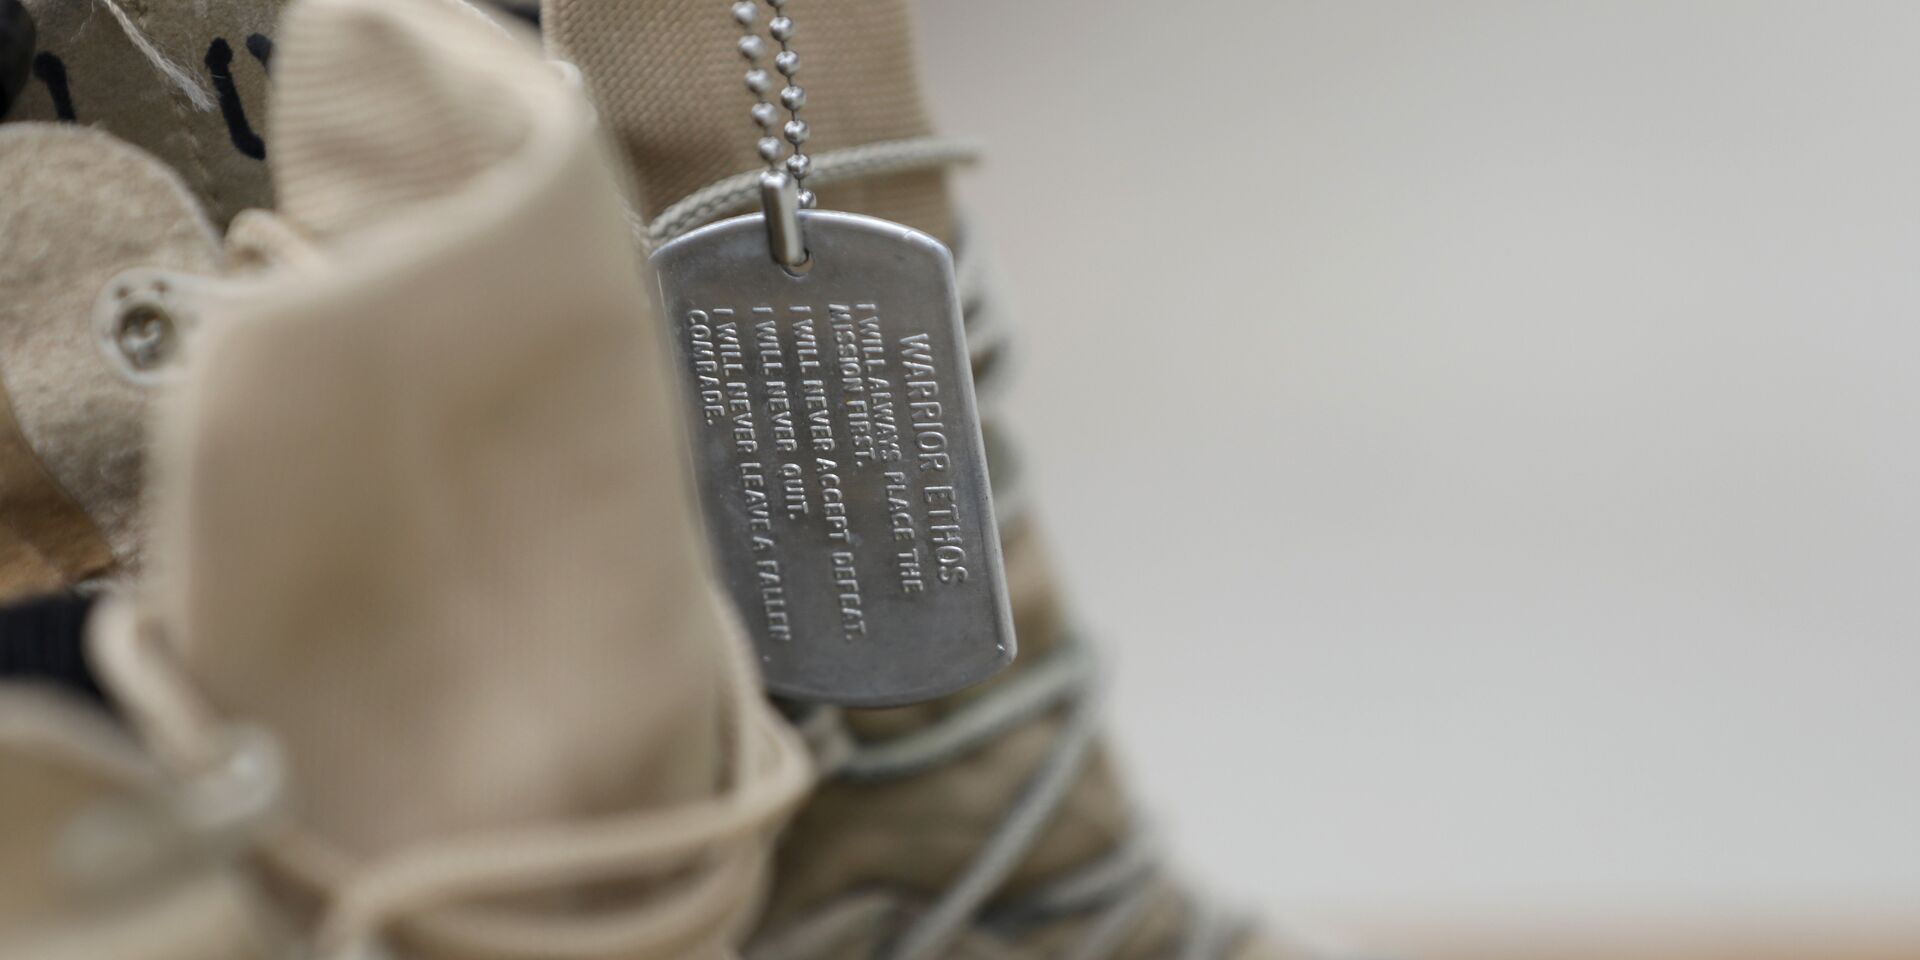 Армейские ботинки и жетон солдата армии США - ИноСМИ, 1920, 16.05.2021